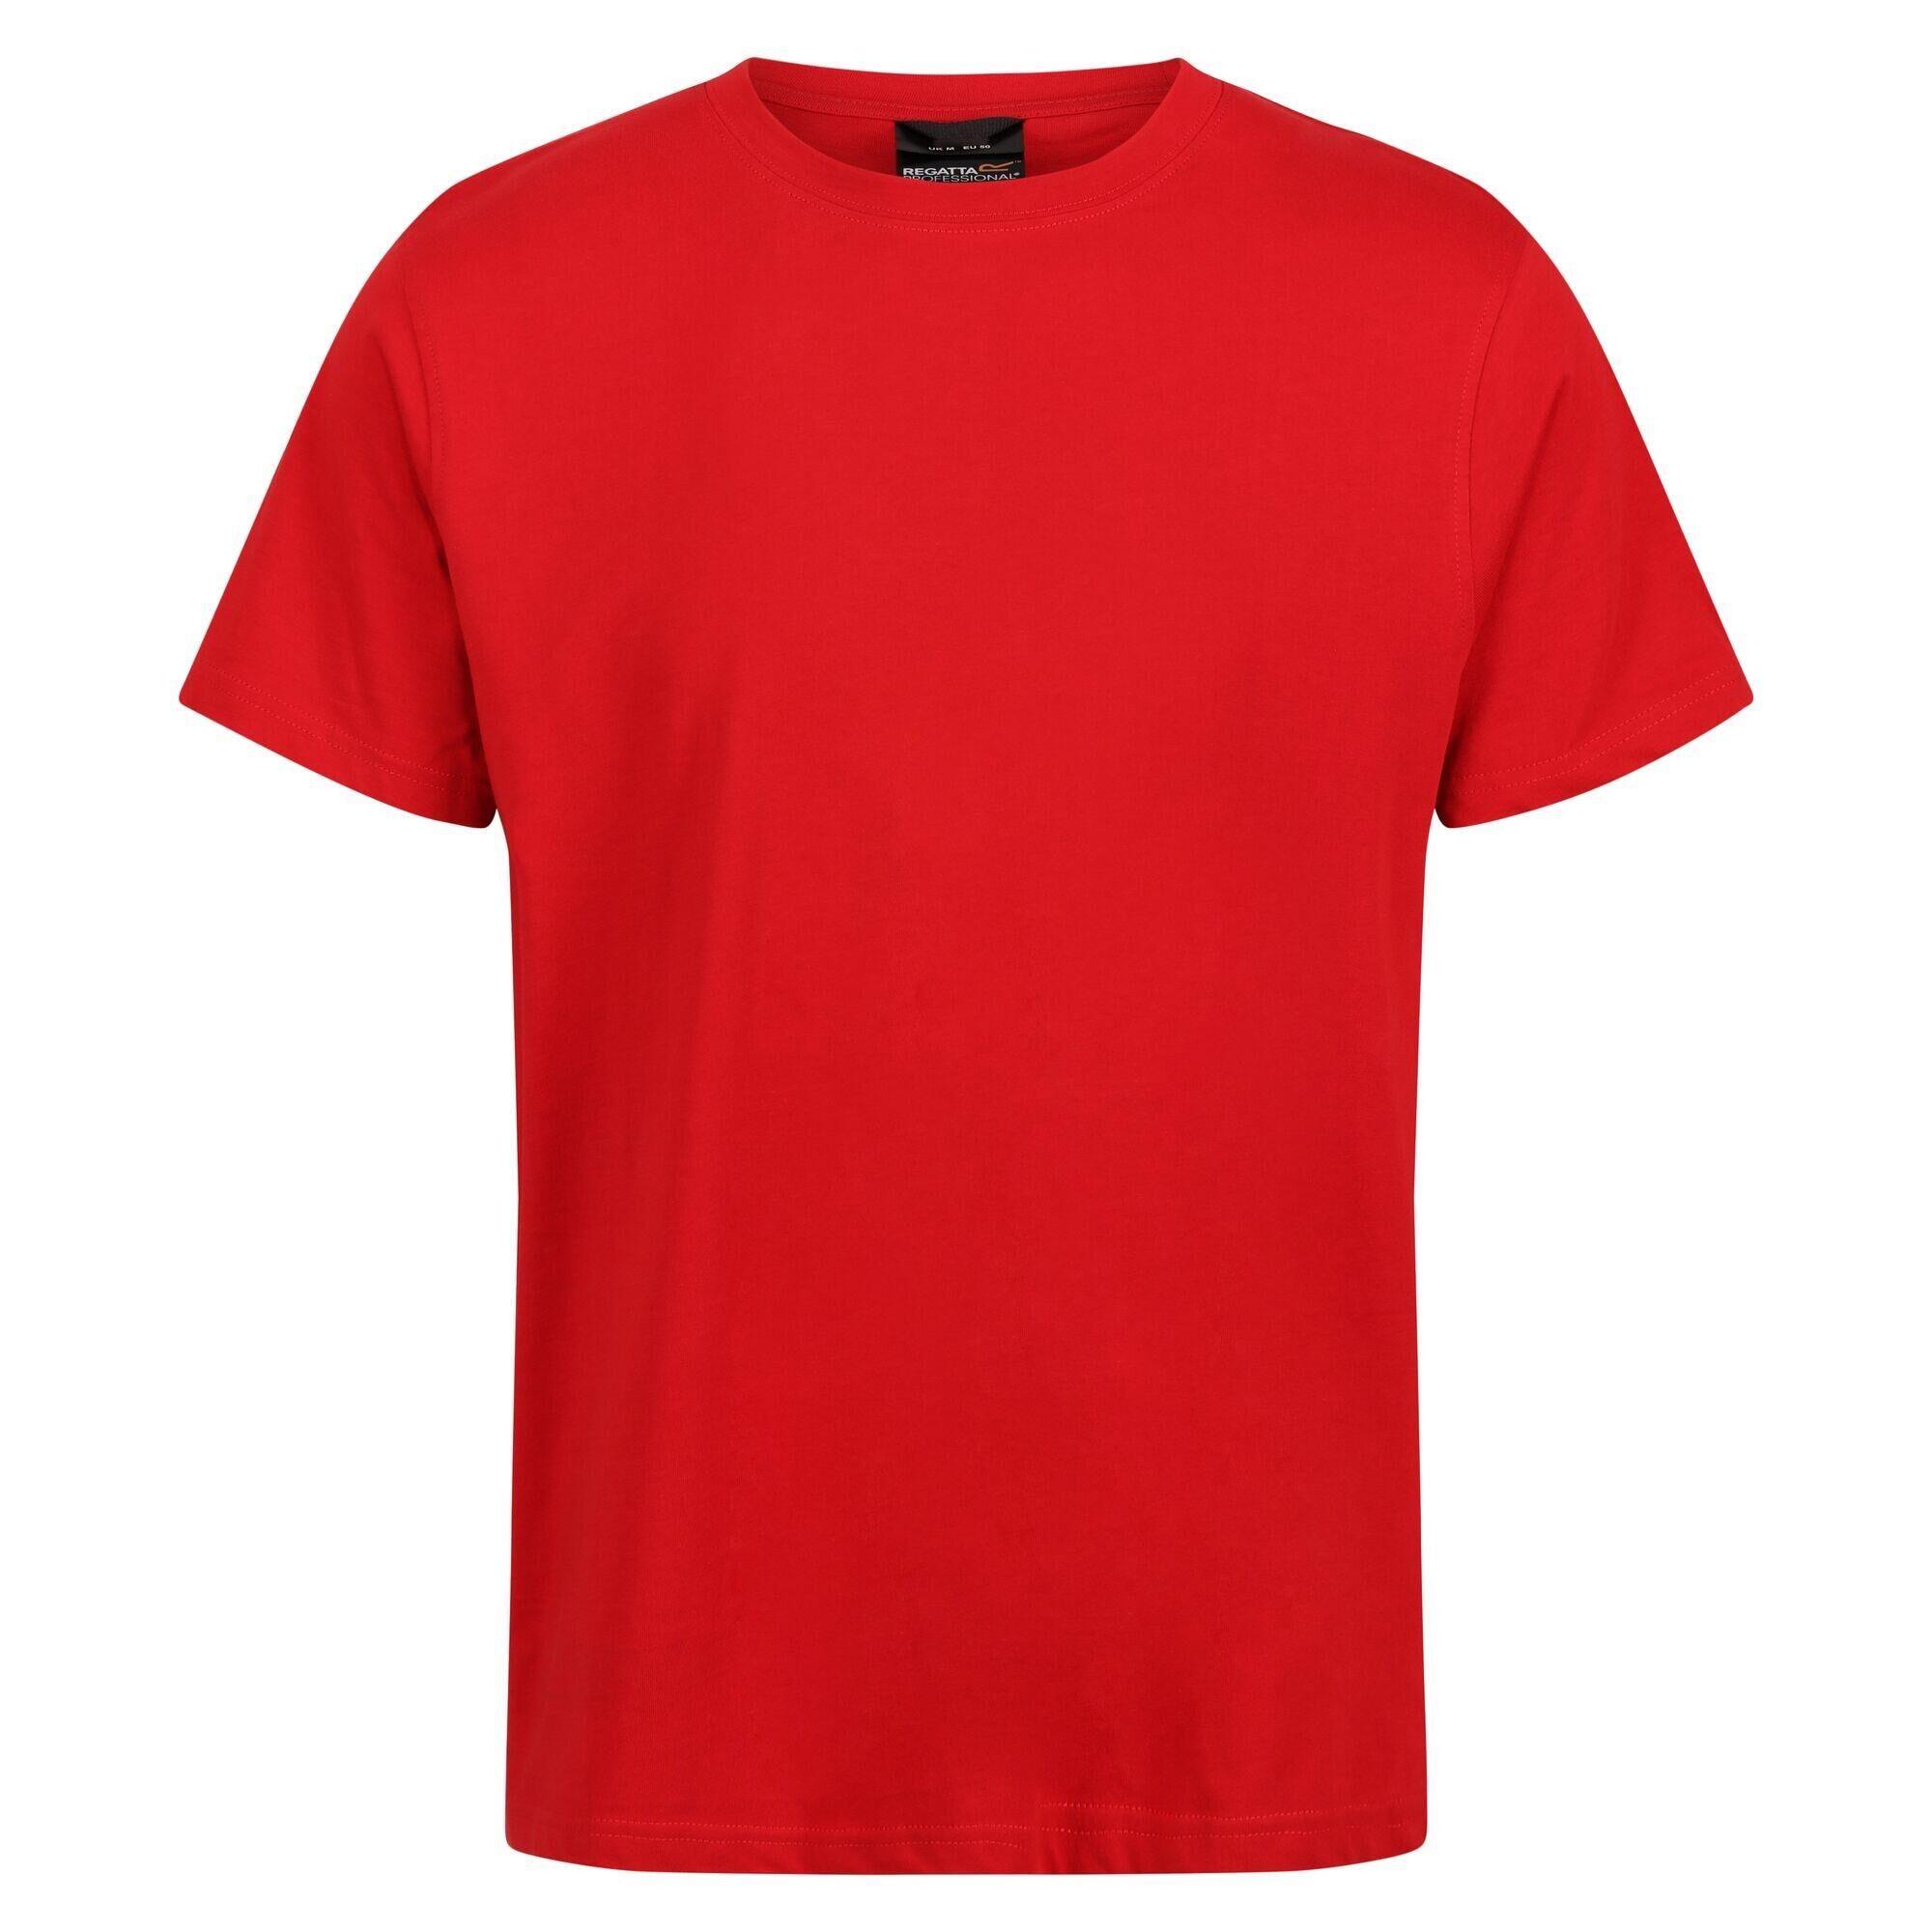 REGATTA Mens Pro Cotton Soft Touch TShirt (Classic Red)